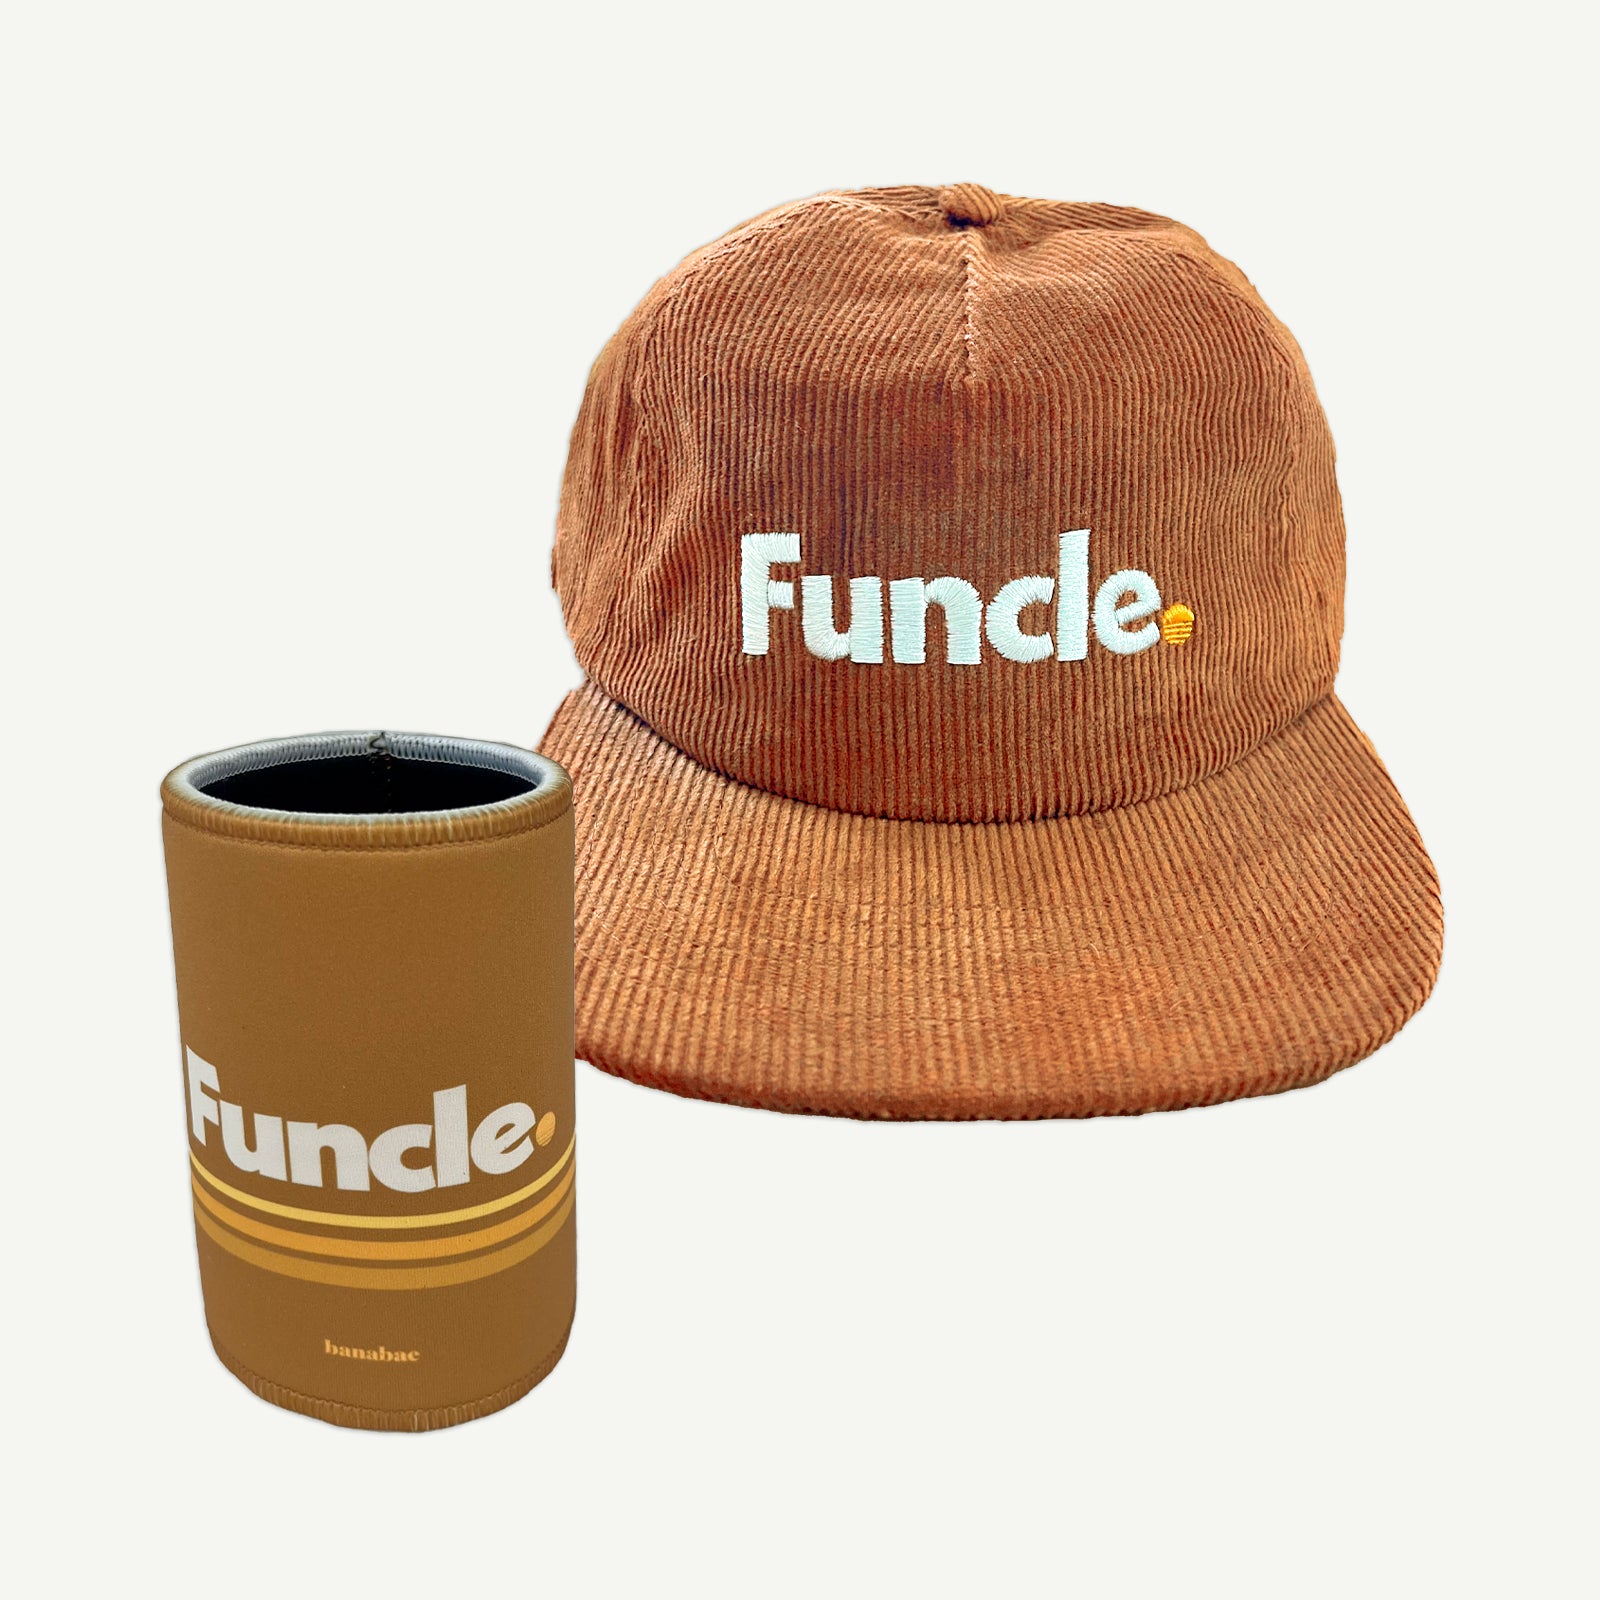 Funcle Cap & Stubby Holder Bundle